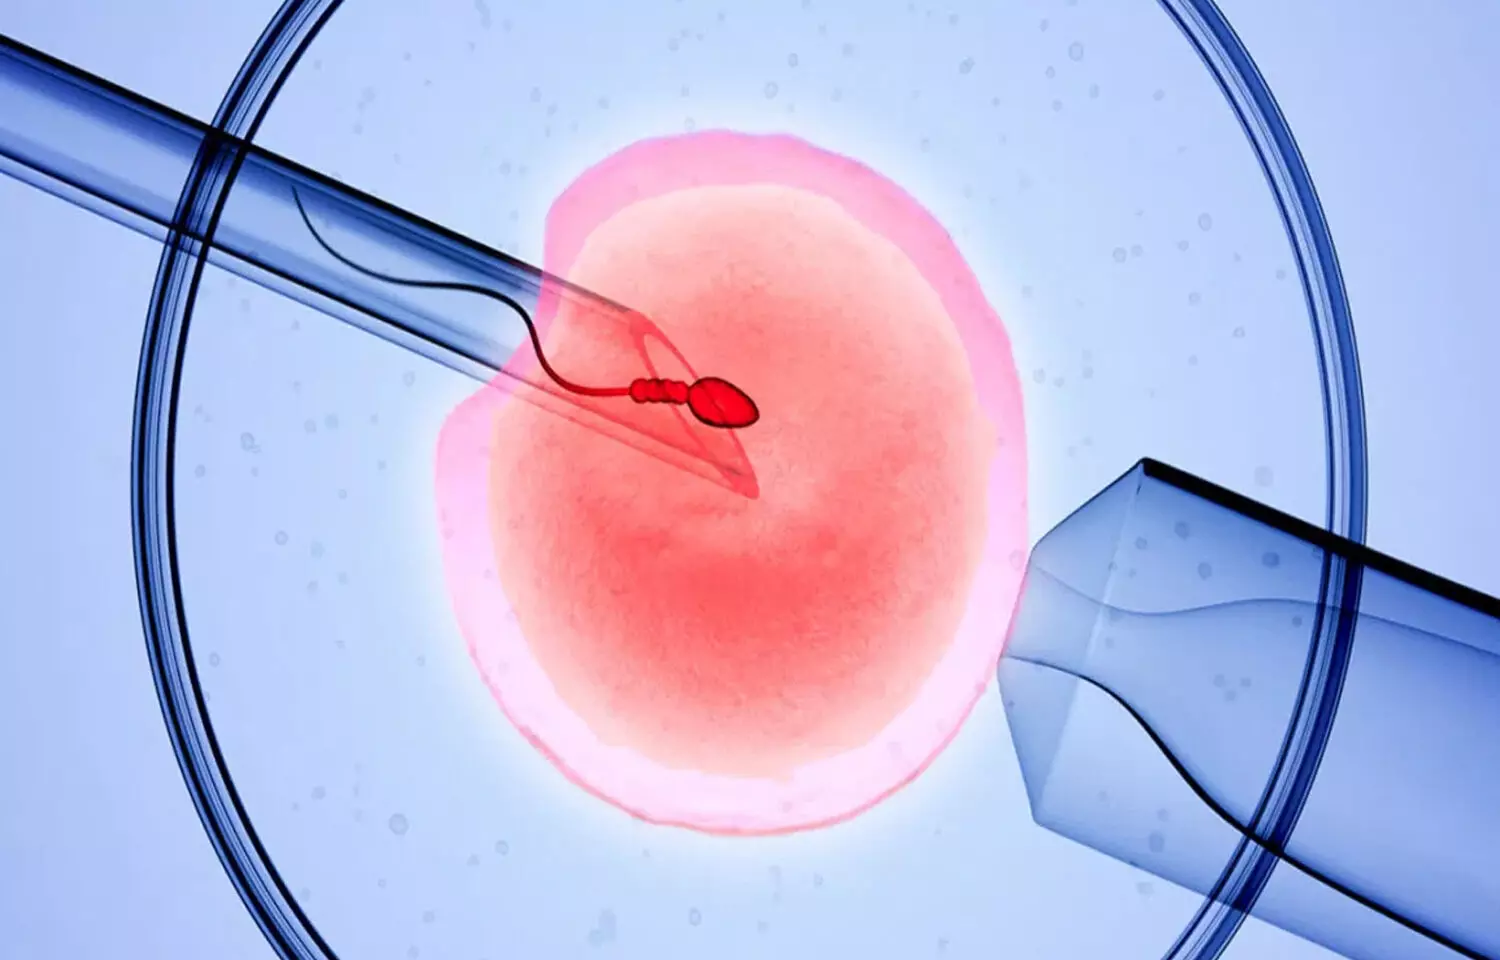 Fresh embryo transfer bests frozen embryo in IVF success: Study